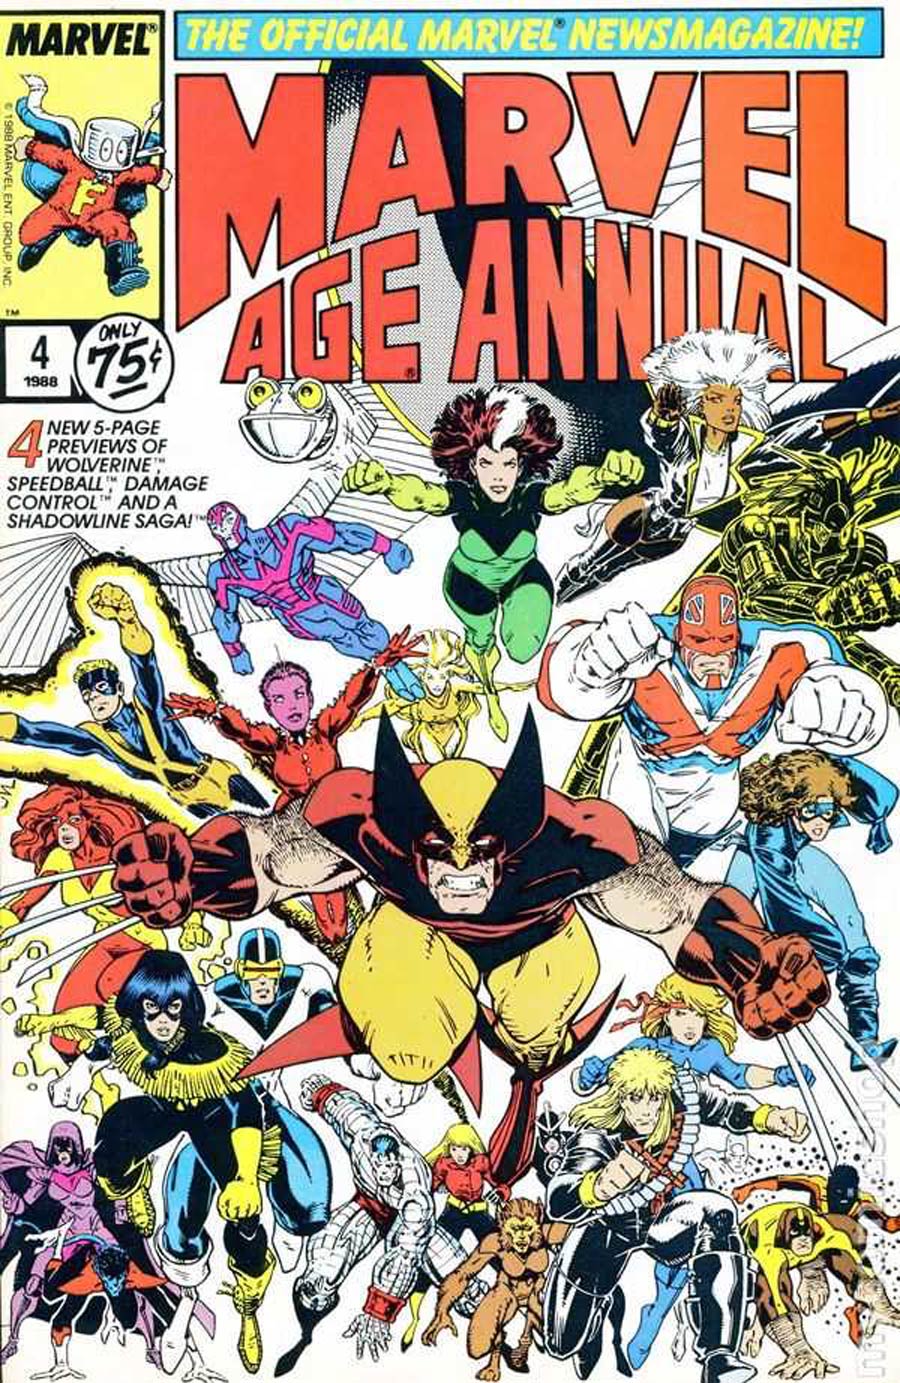 Marvel Age Annual #4